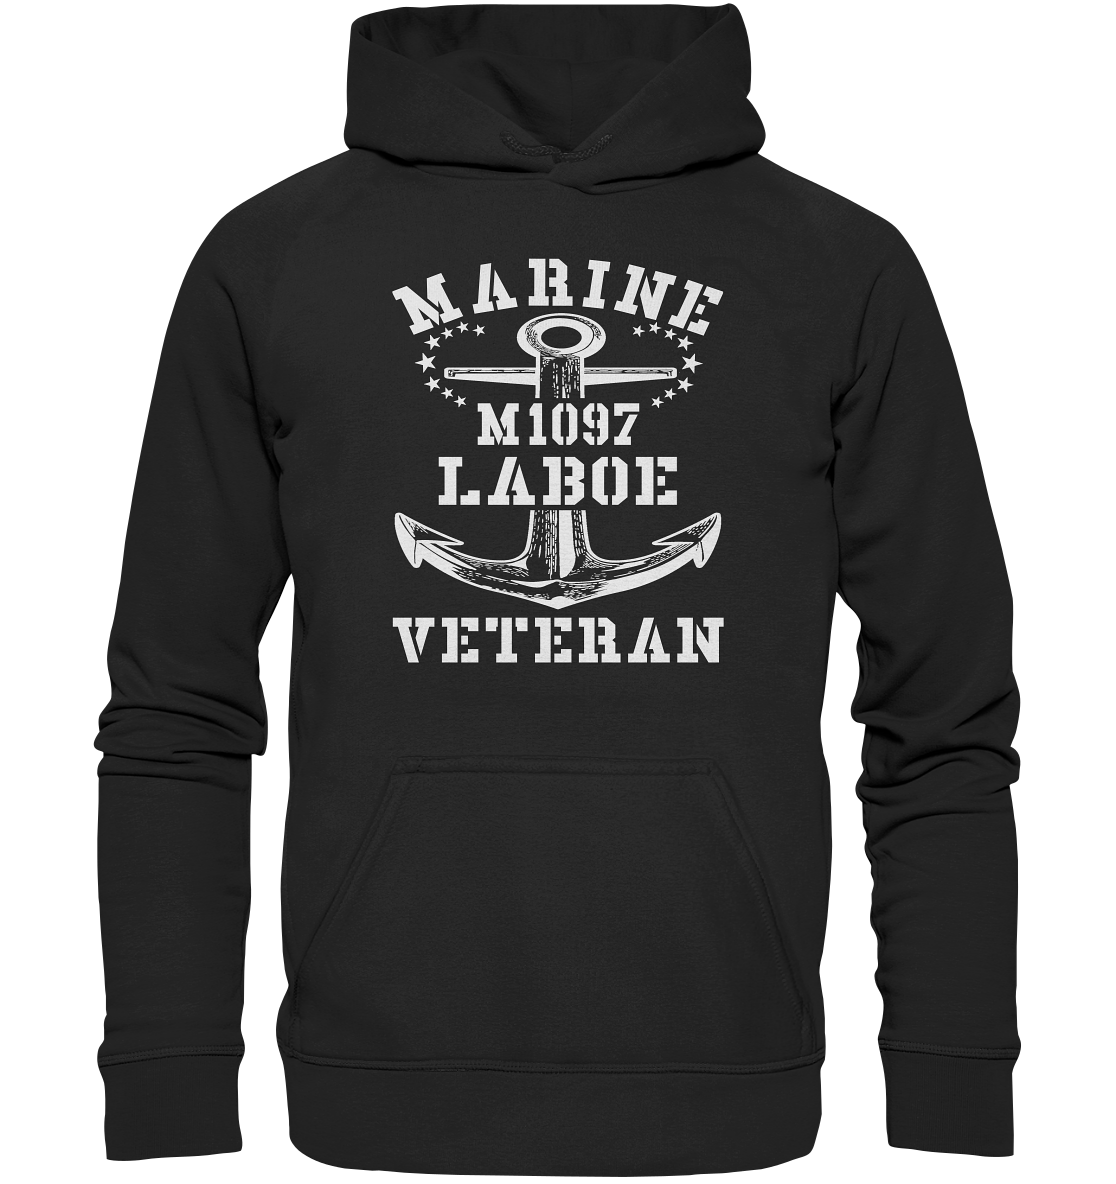 M1097 LABOE Marine Veteran - Basic Unisex Hoodie